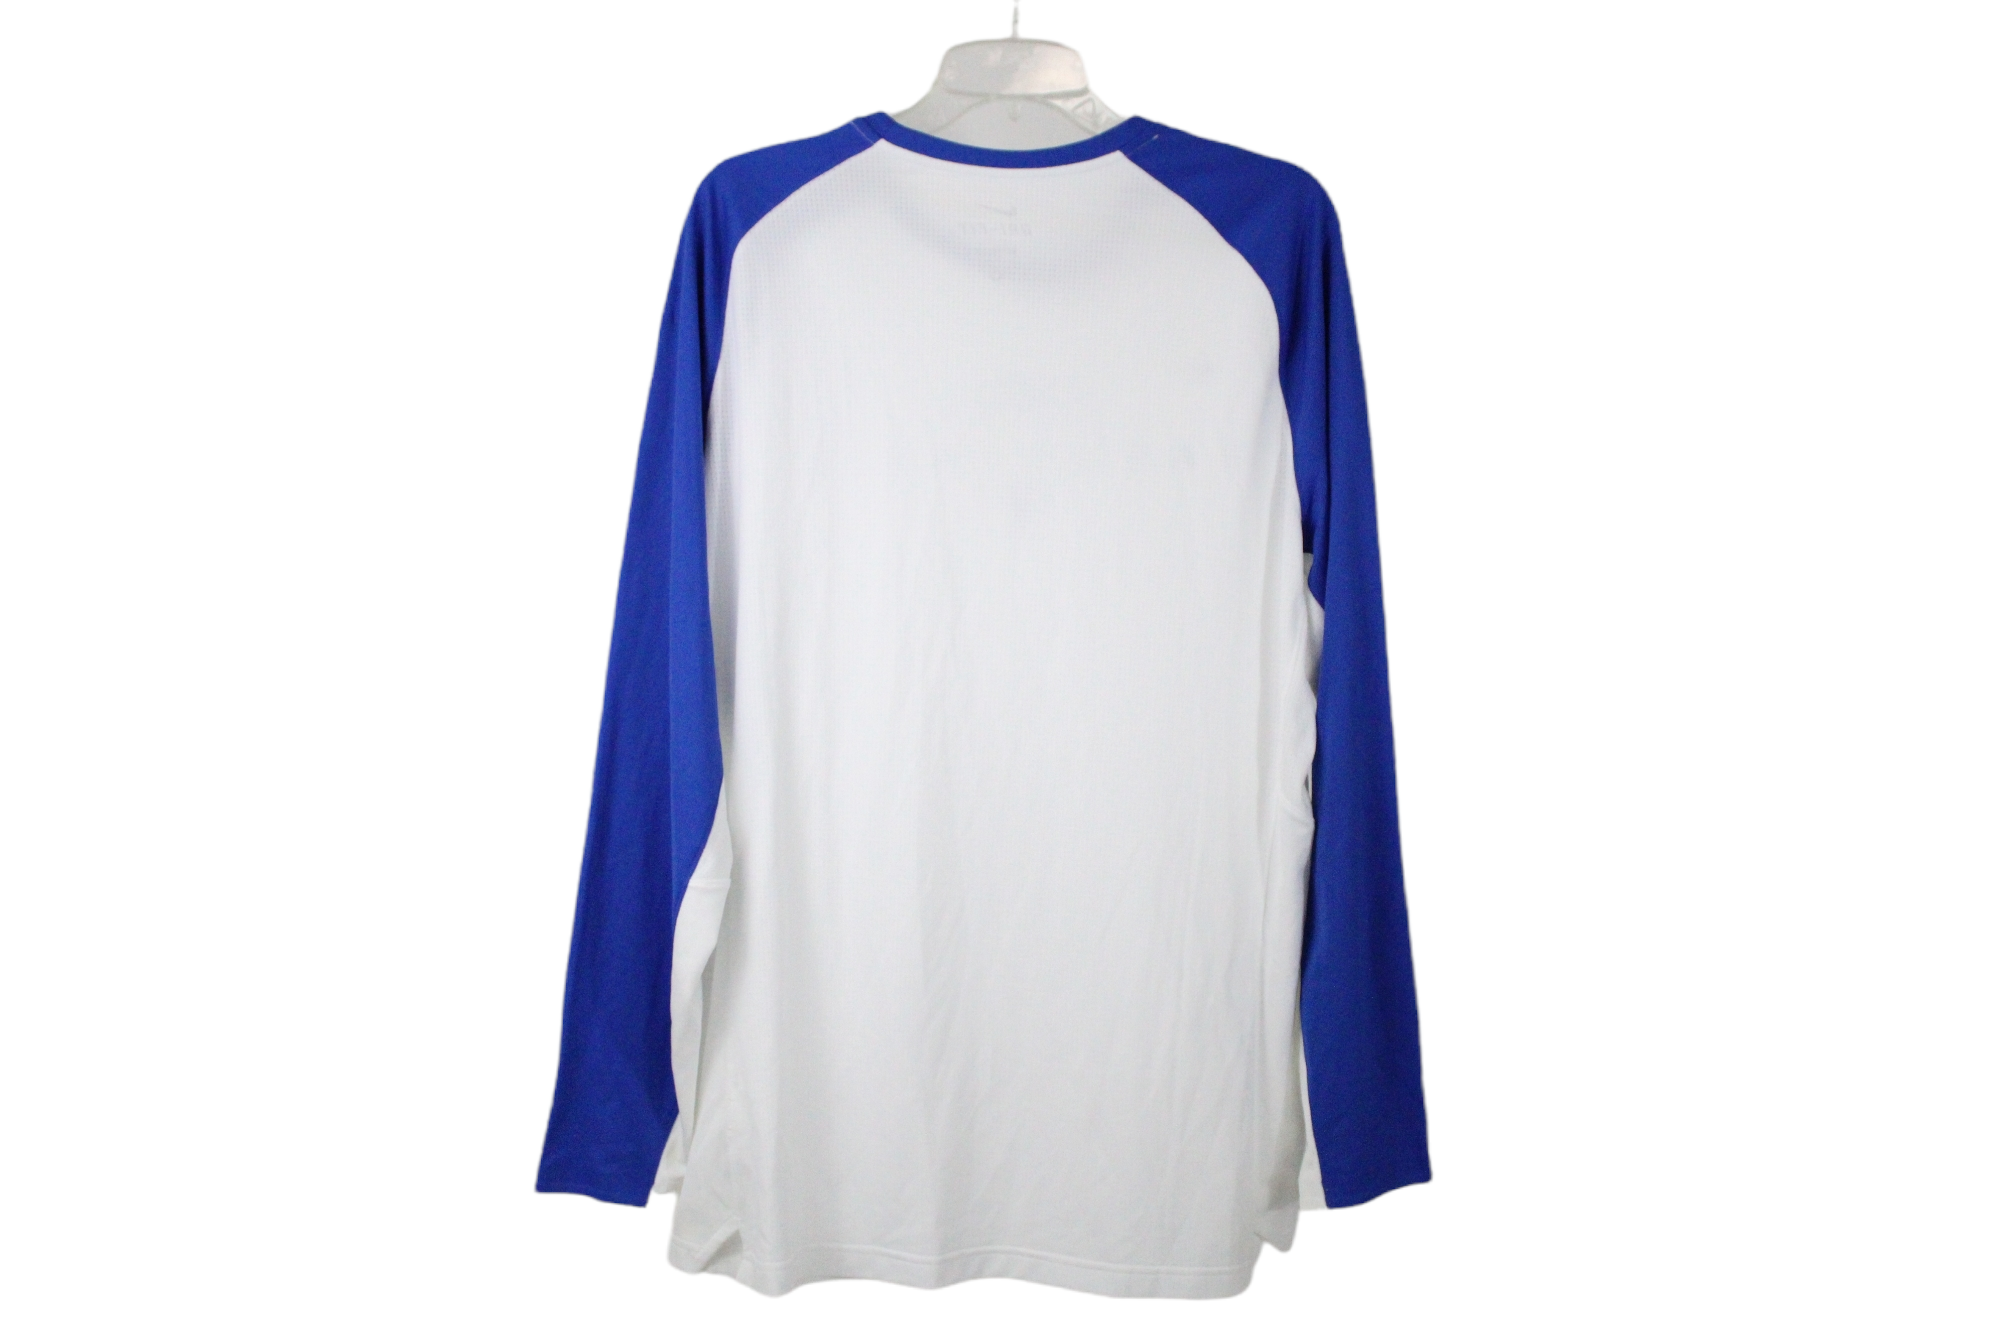 Nike Dri-Fit Basketball Blue White Long Sleeved Shirt | L